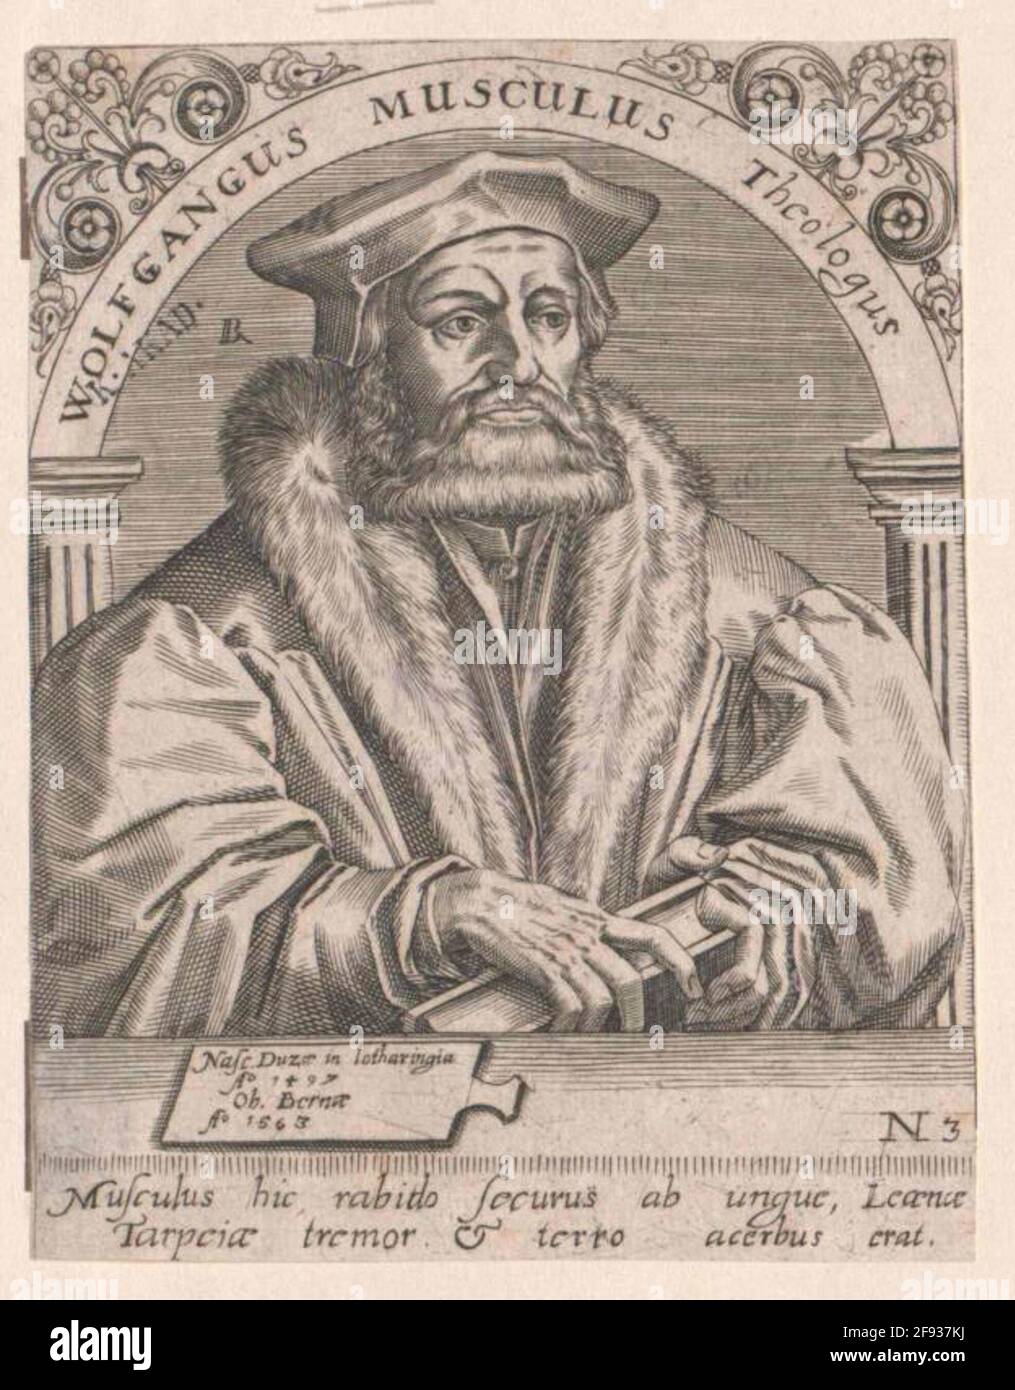 Musculus, Wolfgang Stecher: Bry, Johann Theodor Dedation: 1597/1599 Stock Photo